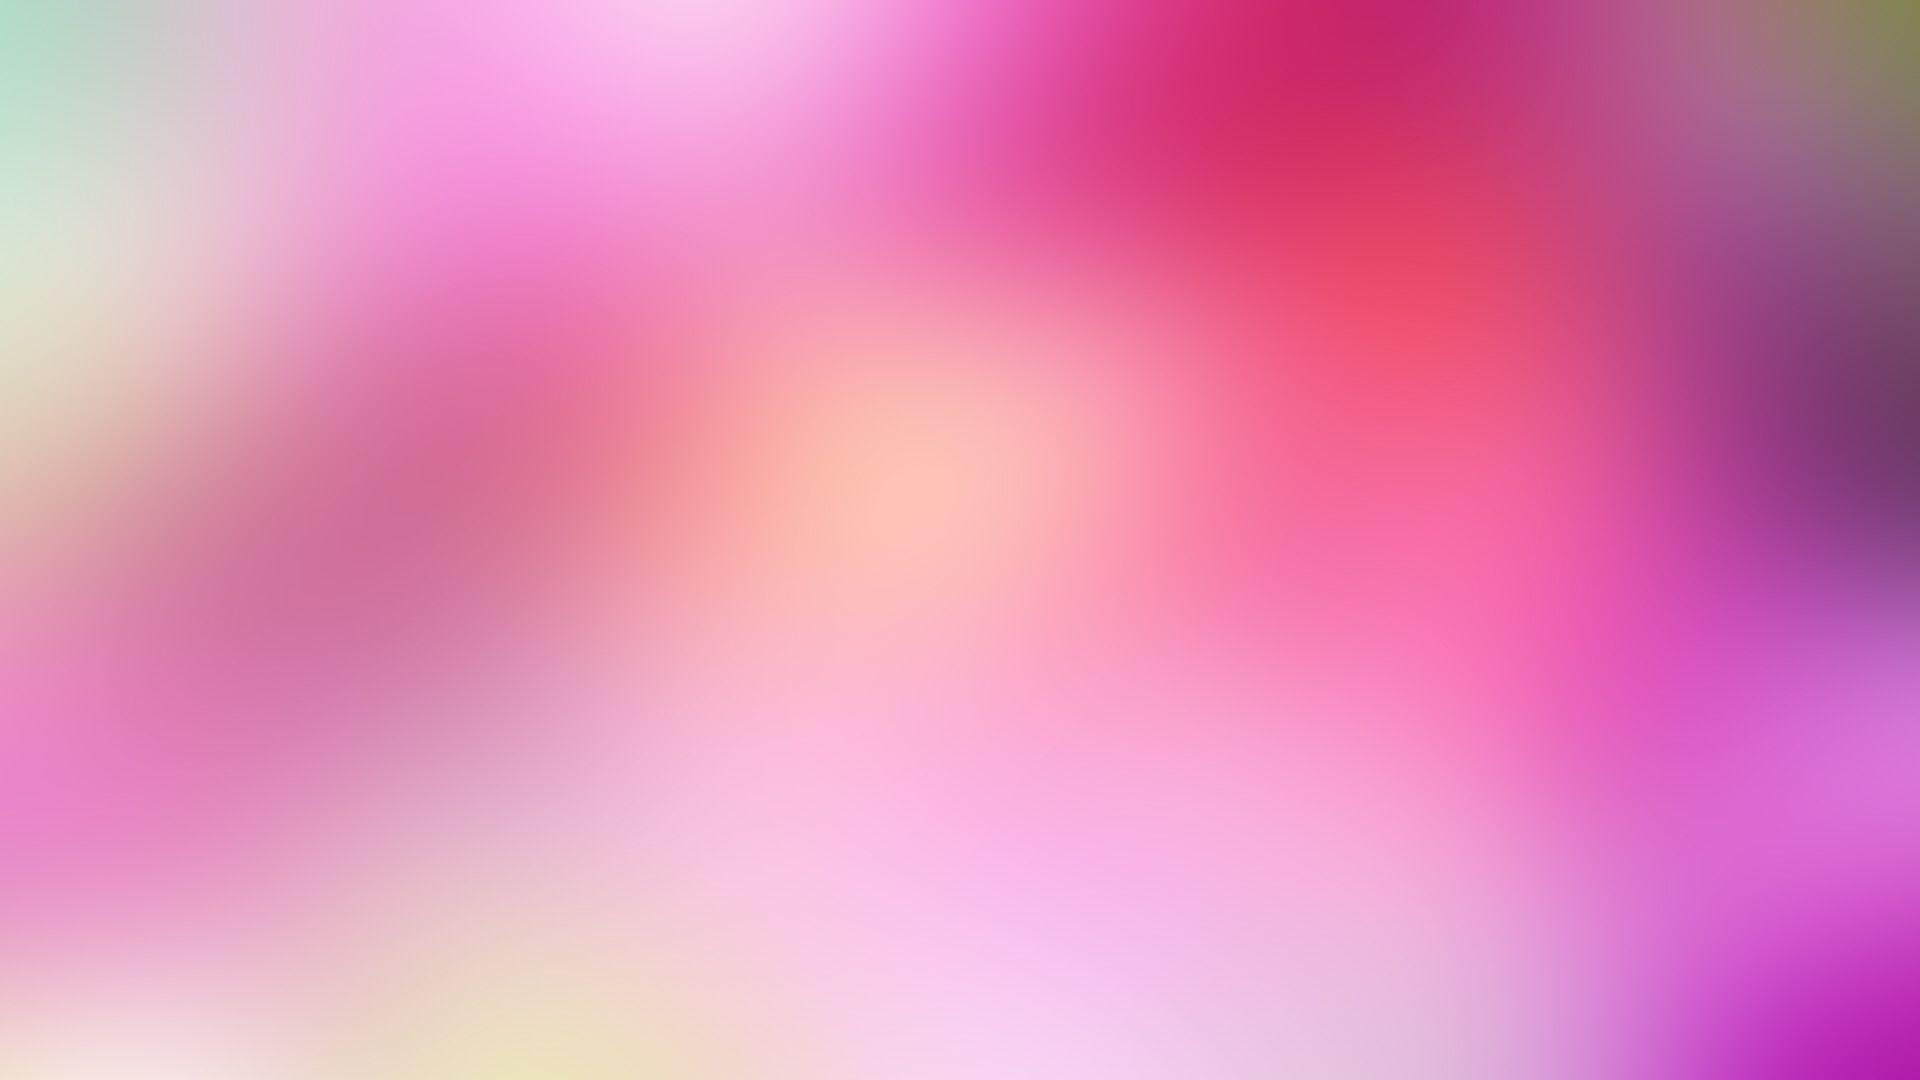 Free Light Pink Wallpaper 24297 1920x1080 px